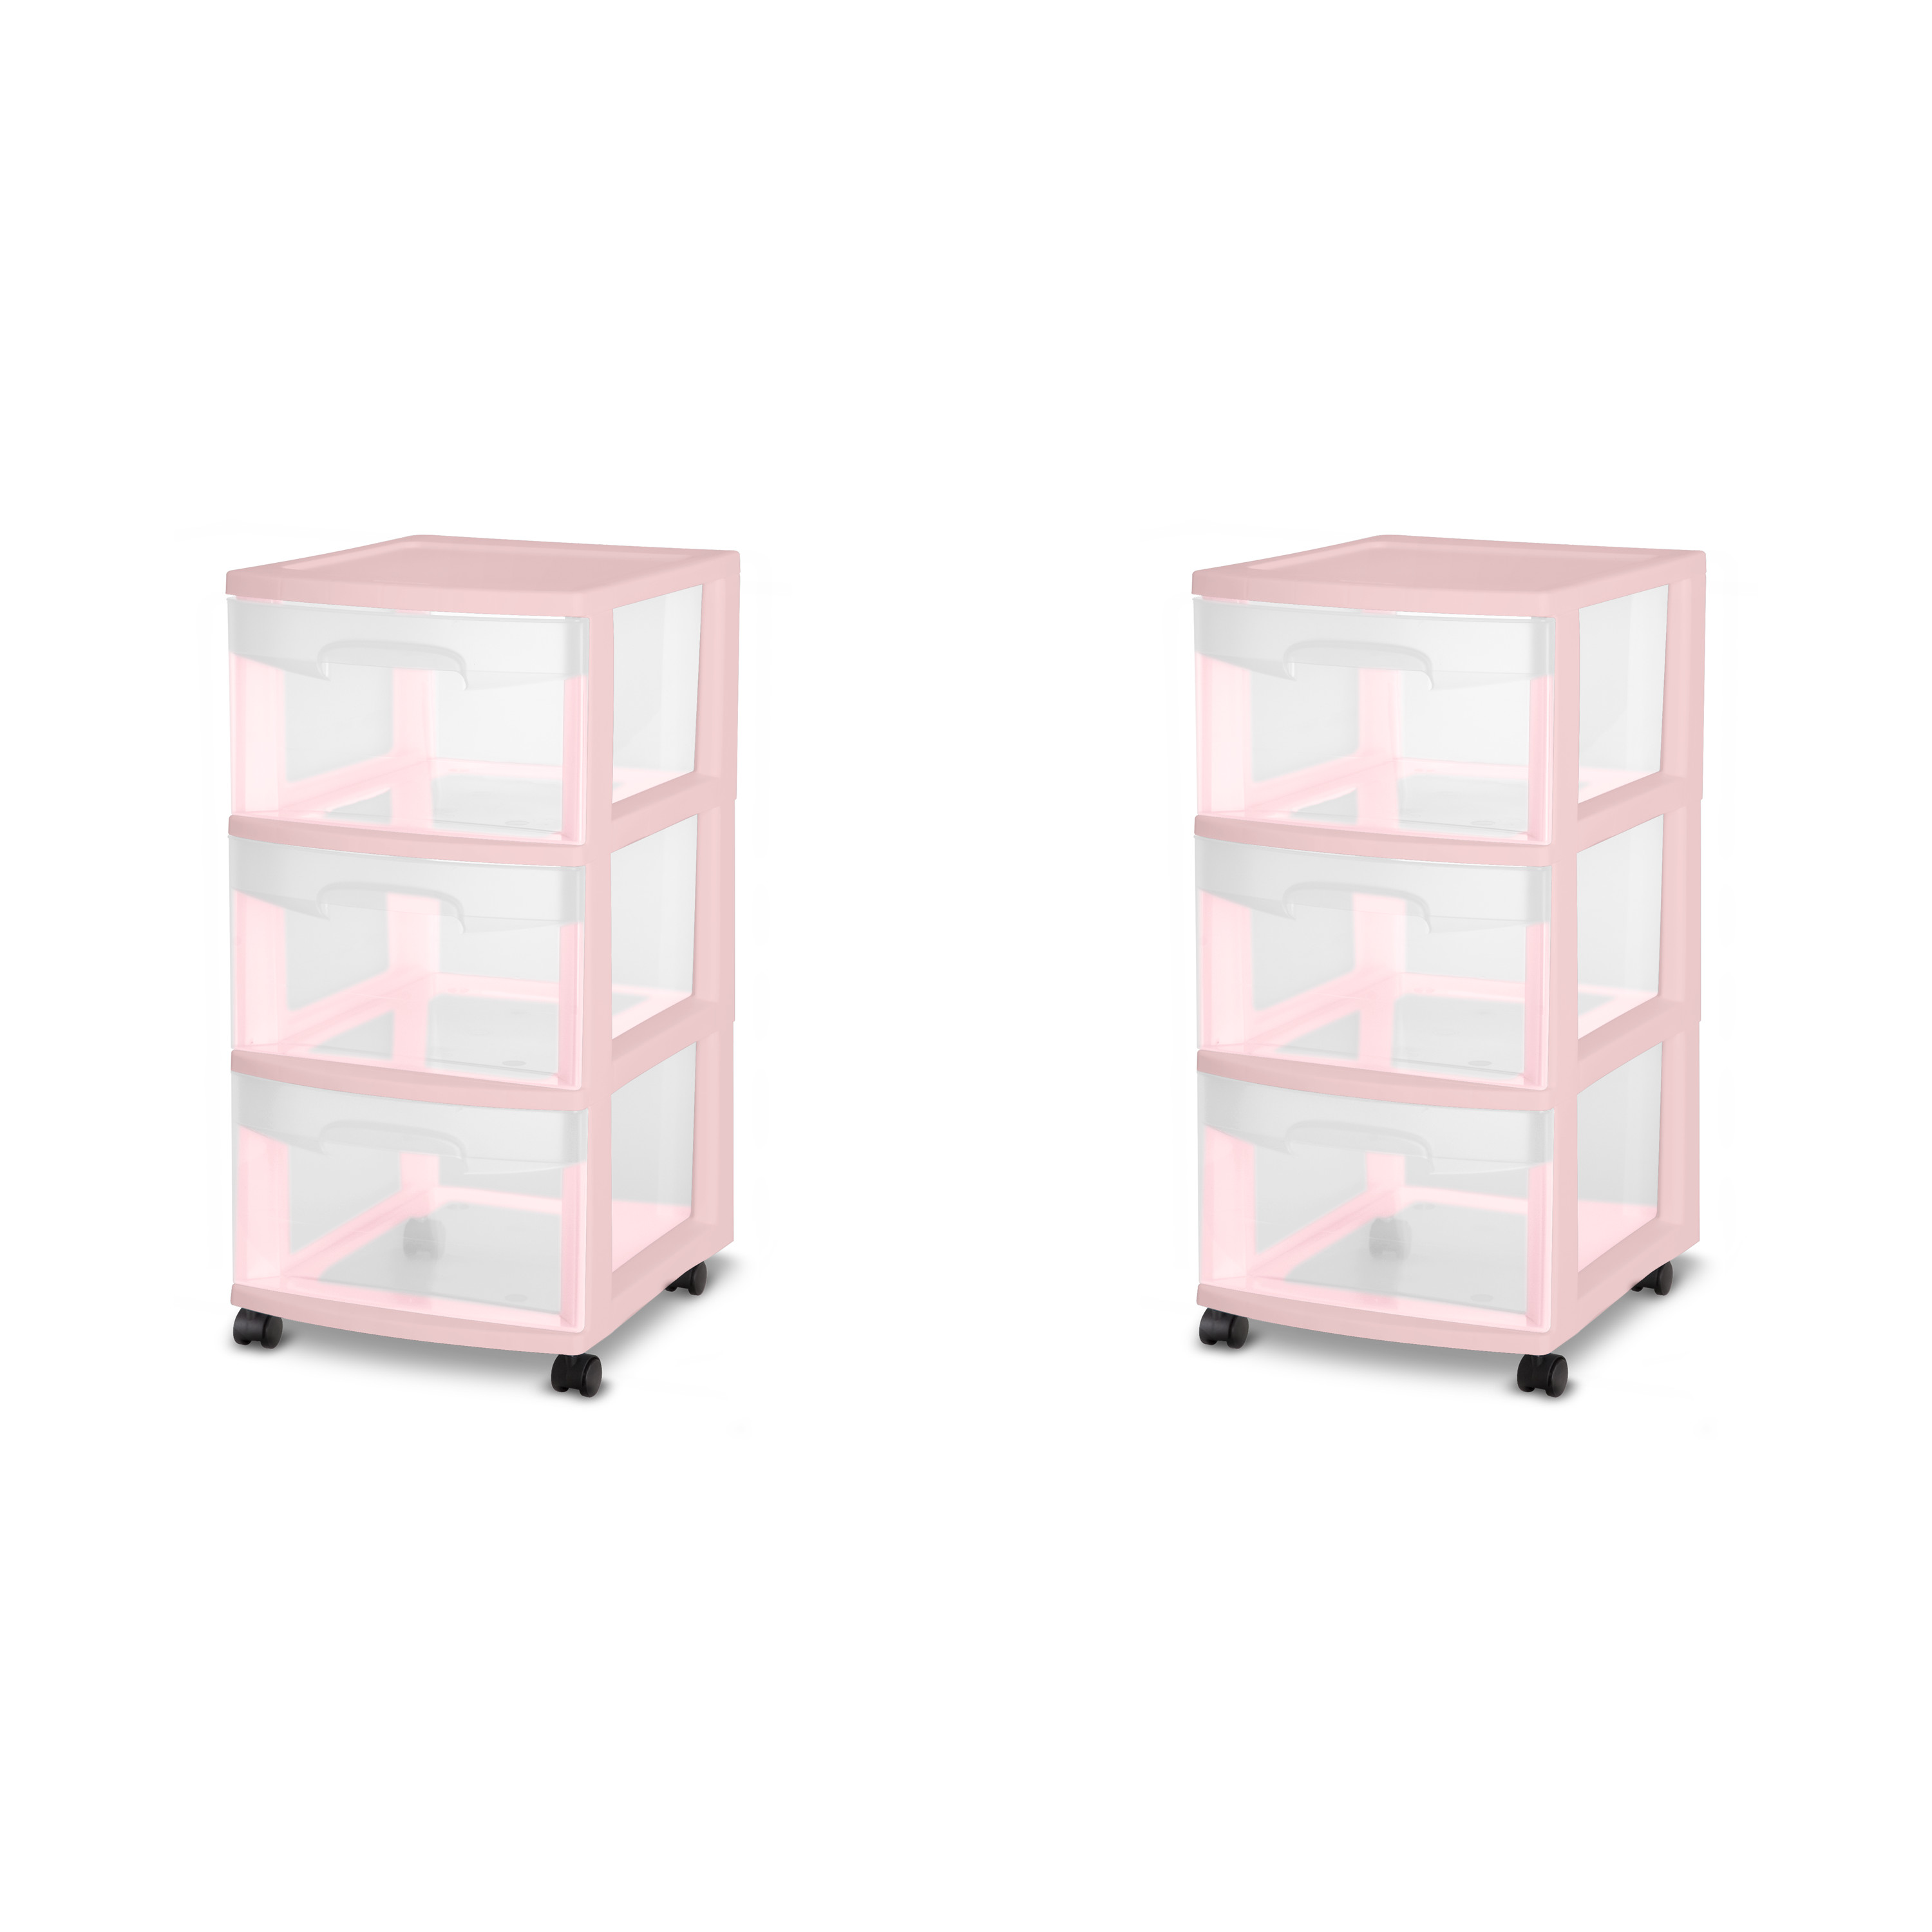 Sterilite Plastic 3 Drawer Cart Blush Pink Set of 2 - image 1 of 9